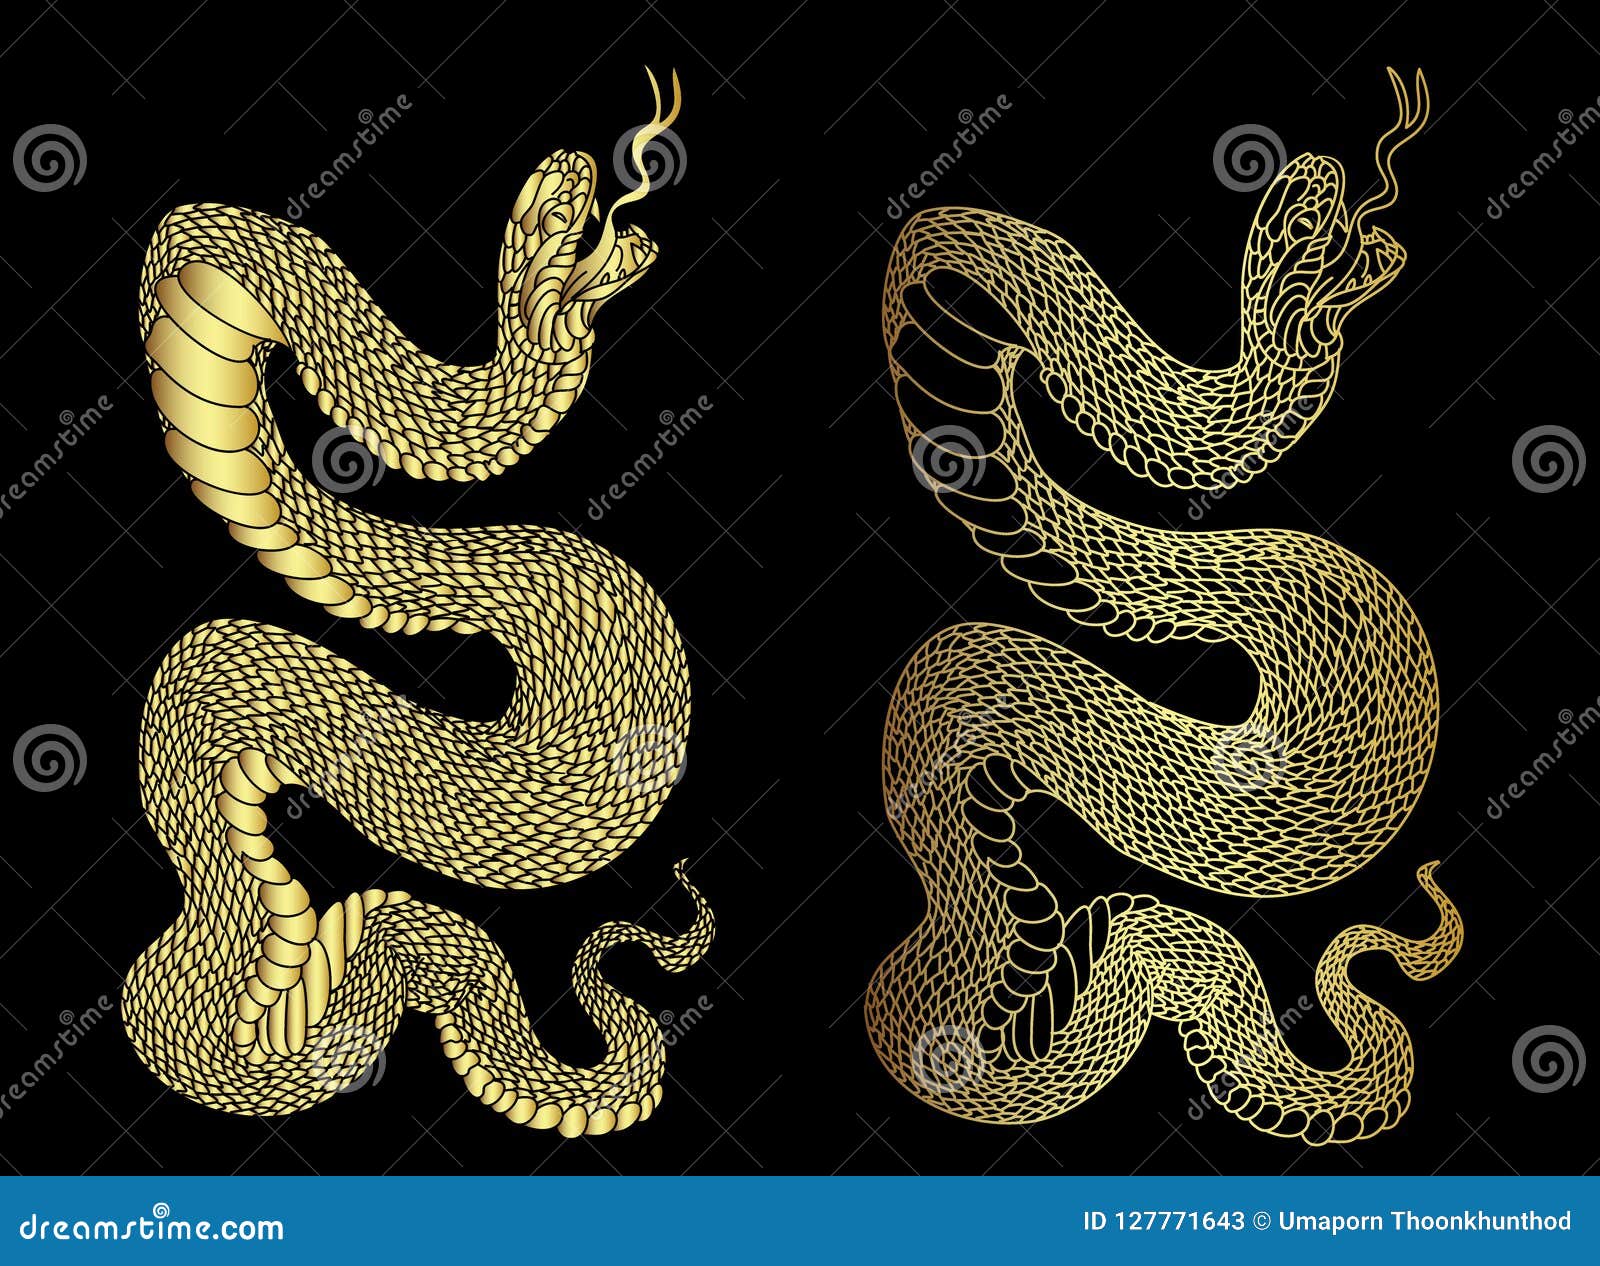 Golden Snake Cobra Isolate on White Background. Stock Vector - Illustration of backgrounddrawing, calligraphy: 127771643